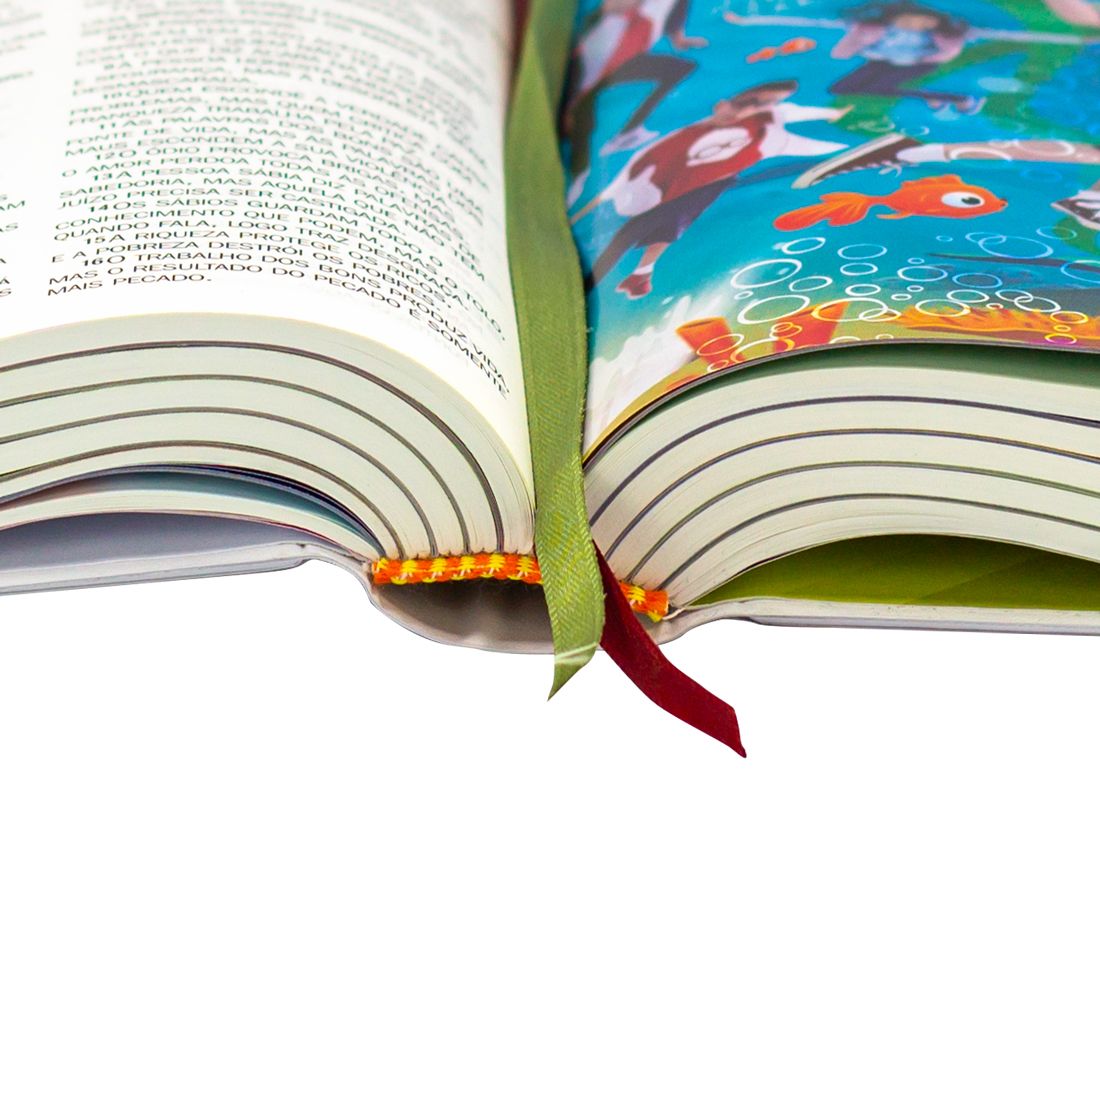 Bíblia de Estudo Kids - O Mundo de Otávio - Pre venda entrega a partir de 28/5